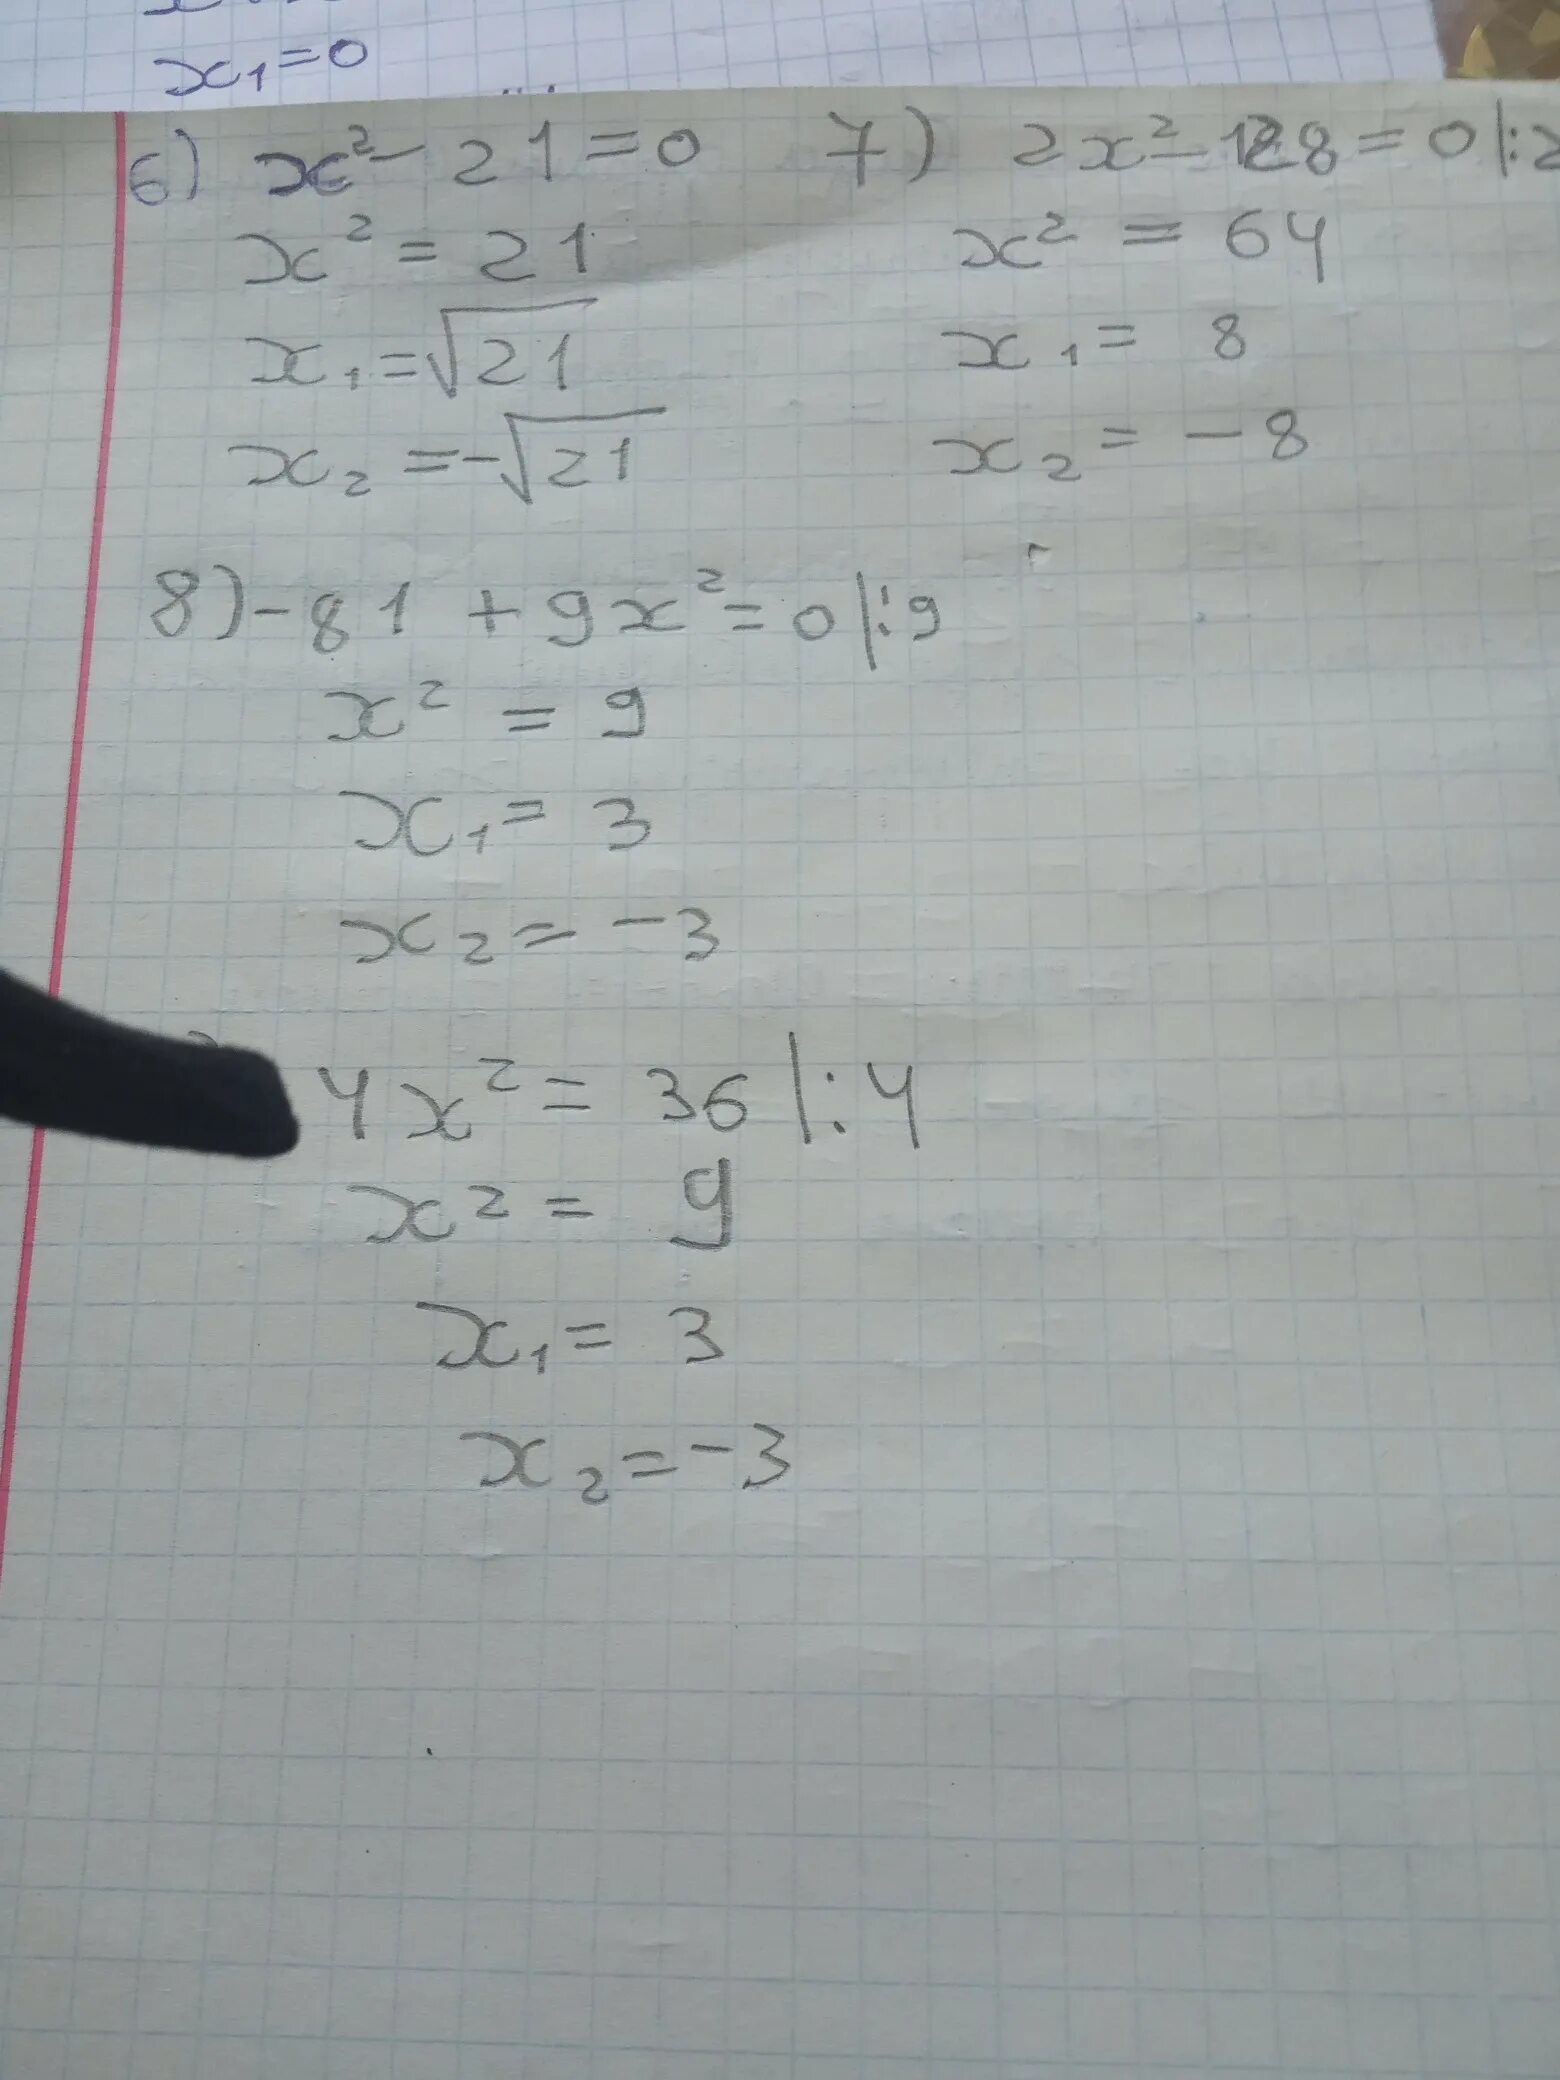 3x 6x 12 0. X2+3x-28. 5x^2+9x=0. X2/x2-9 12-x/x2-9. 3x 81 решение.